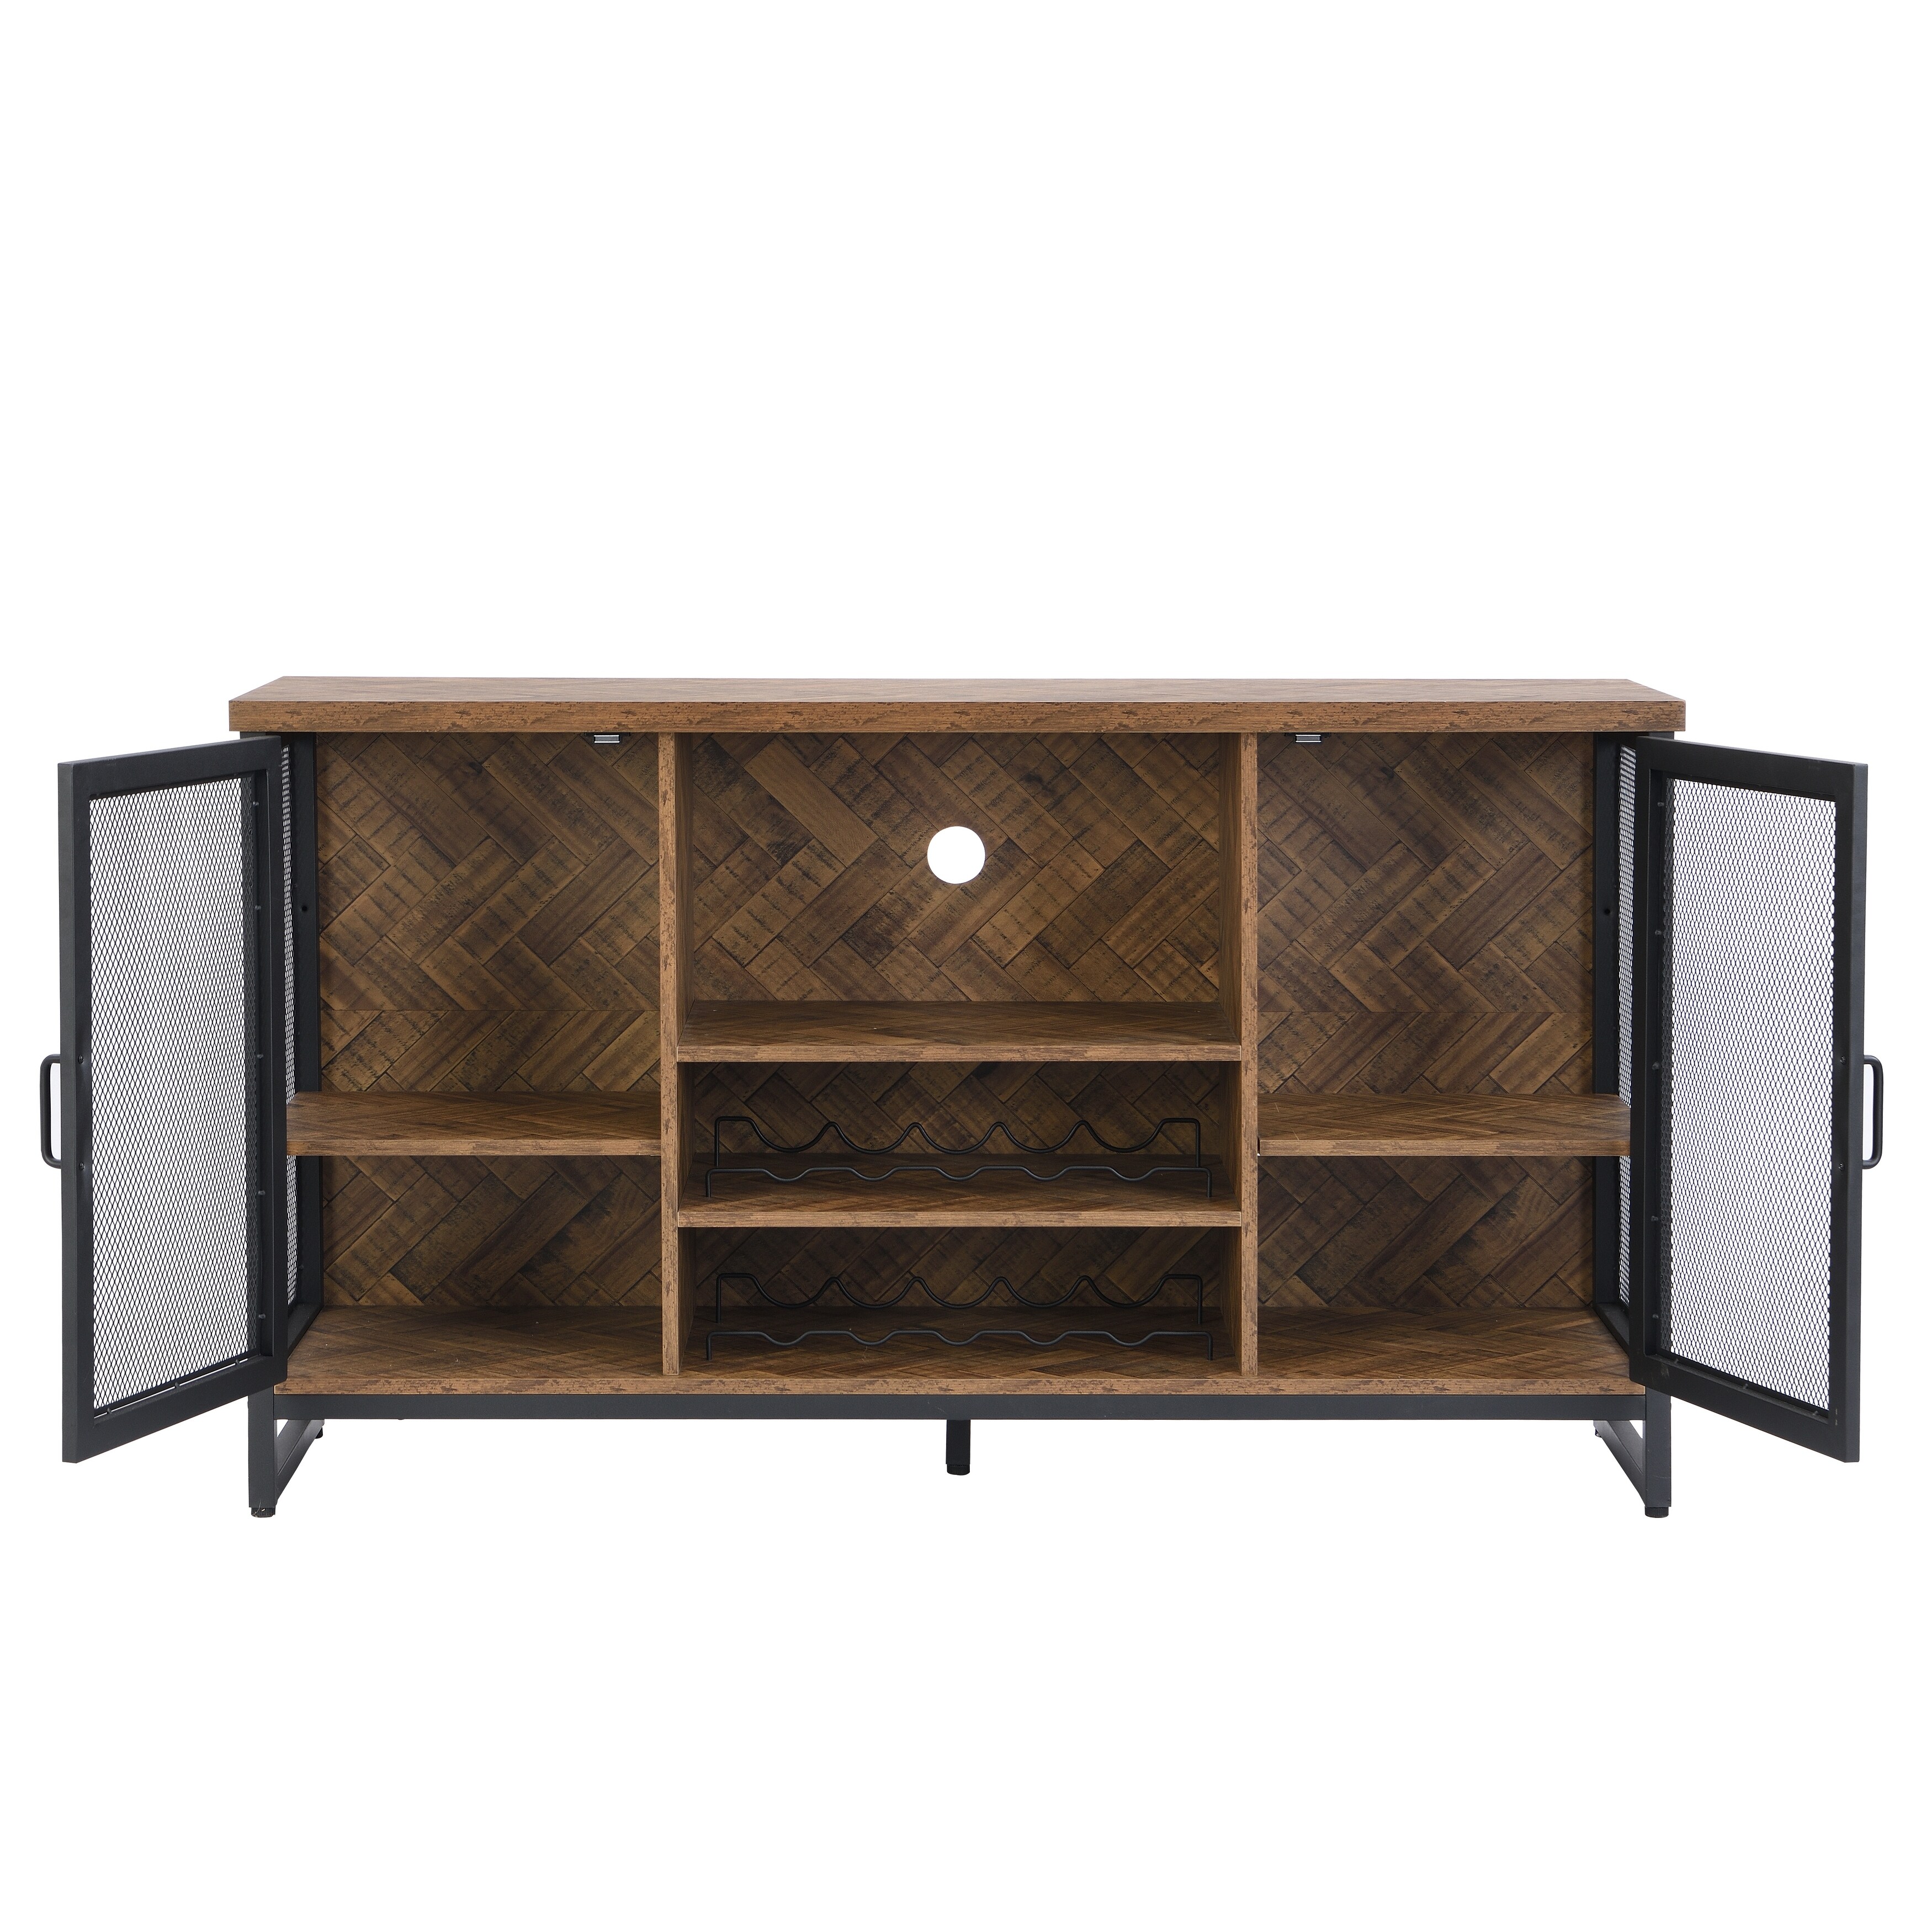 TV stand media cabinet removable shelf storage cabinet for living room